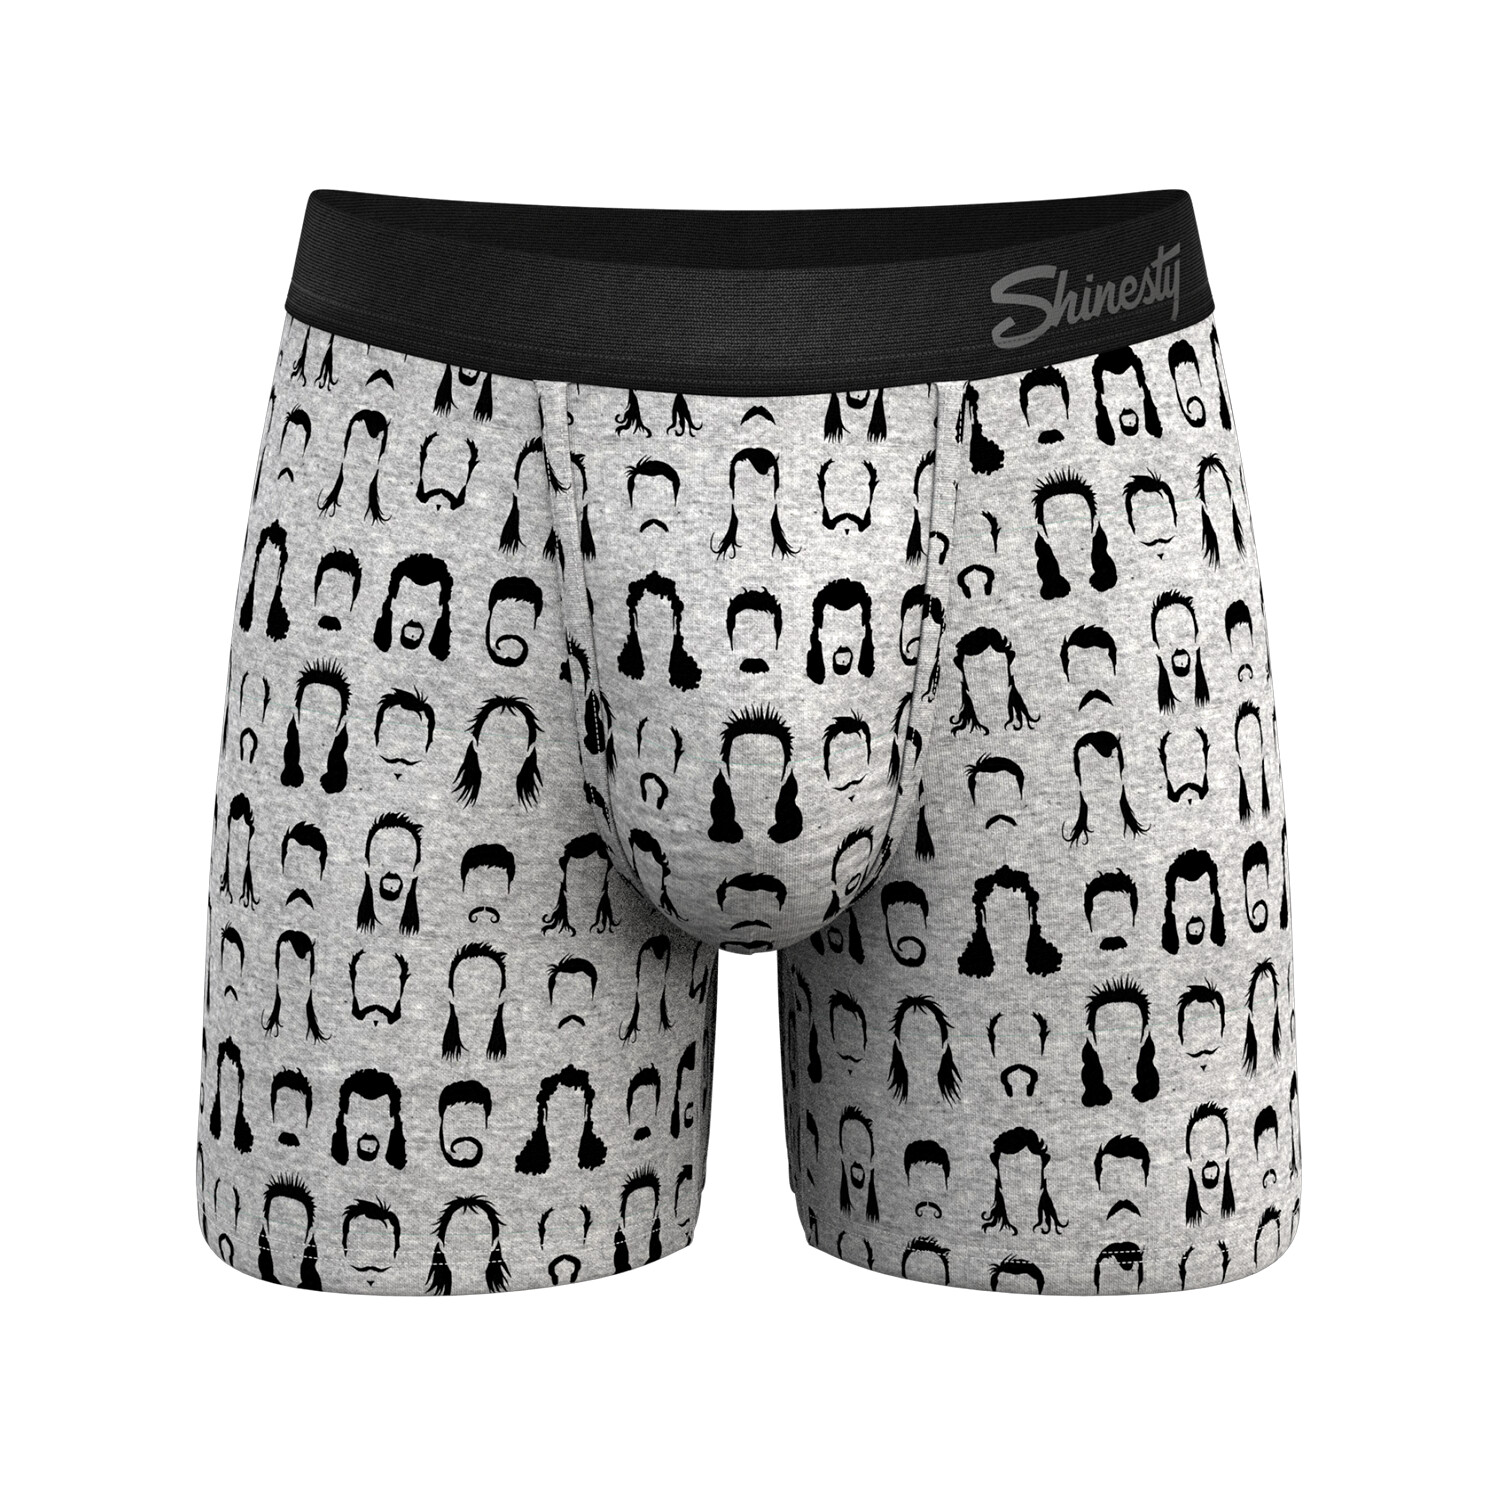 XL Men's Boxer Briefs - Micro Modal Ball Hammock Underwear